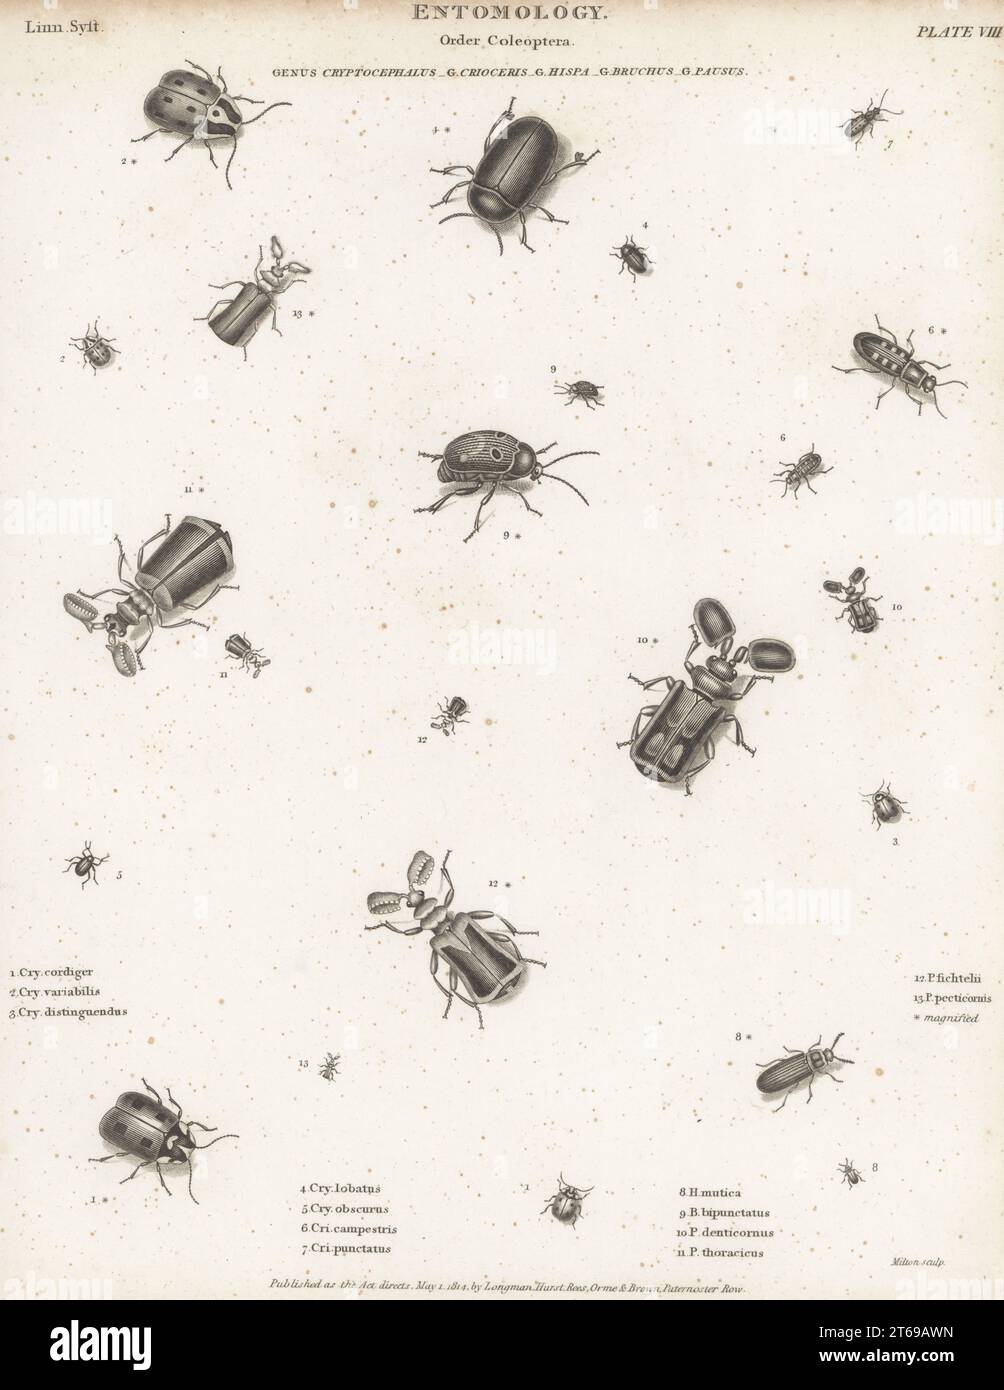 Leaf beetles, Cryptocephalus cordiger 1, Cry. variabilis 2, Cry. distinguendus 3, Cry. schaefferi 4, western grape rootworm, Bromius obscurus 5, asparagus beetles, Crioceris macilenta 6, spotted asparagus beetle, Crioceris duodecimpunctata 7, brush-horned sand beetle, Orthocerus clavicornis 8, sand beetle, Bruchus bipunctatus 9, and ground beetles, Paussus denticornus 10, P. thoracicus 11. P. fichtelii 12, and P. pecticornis 13, * magnified. Copperplate engraving by Thomas Milton from Abraham Rees' Cyclopedia or Universal Dictionary of Arts, Sciences and Literature, Longman, Hurst, Rees, Orme Stock Photo